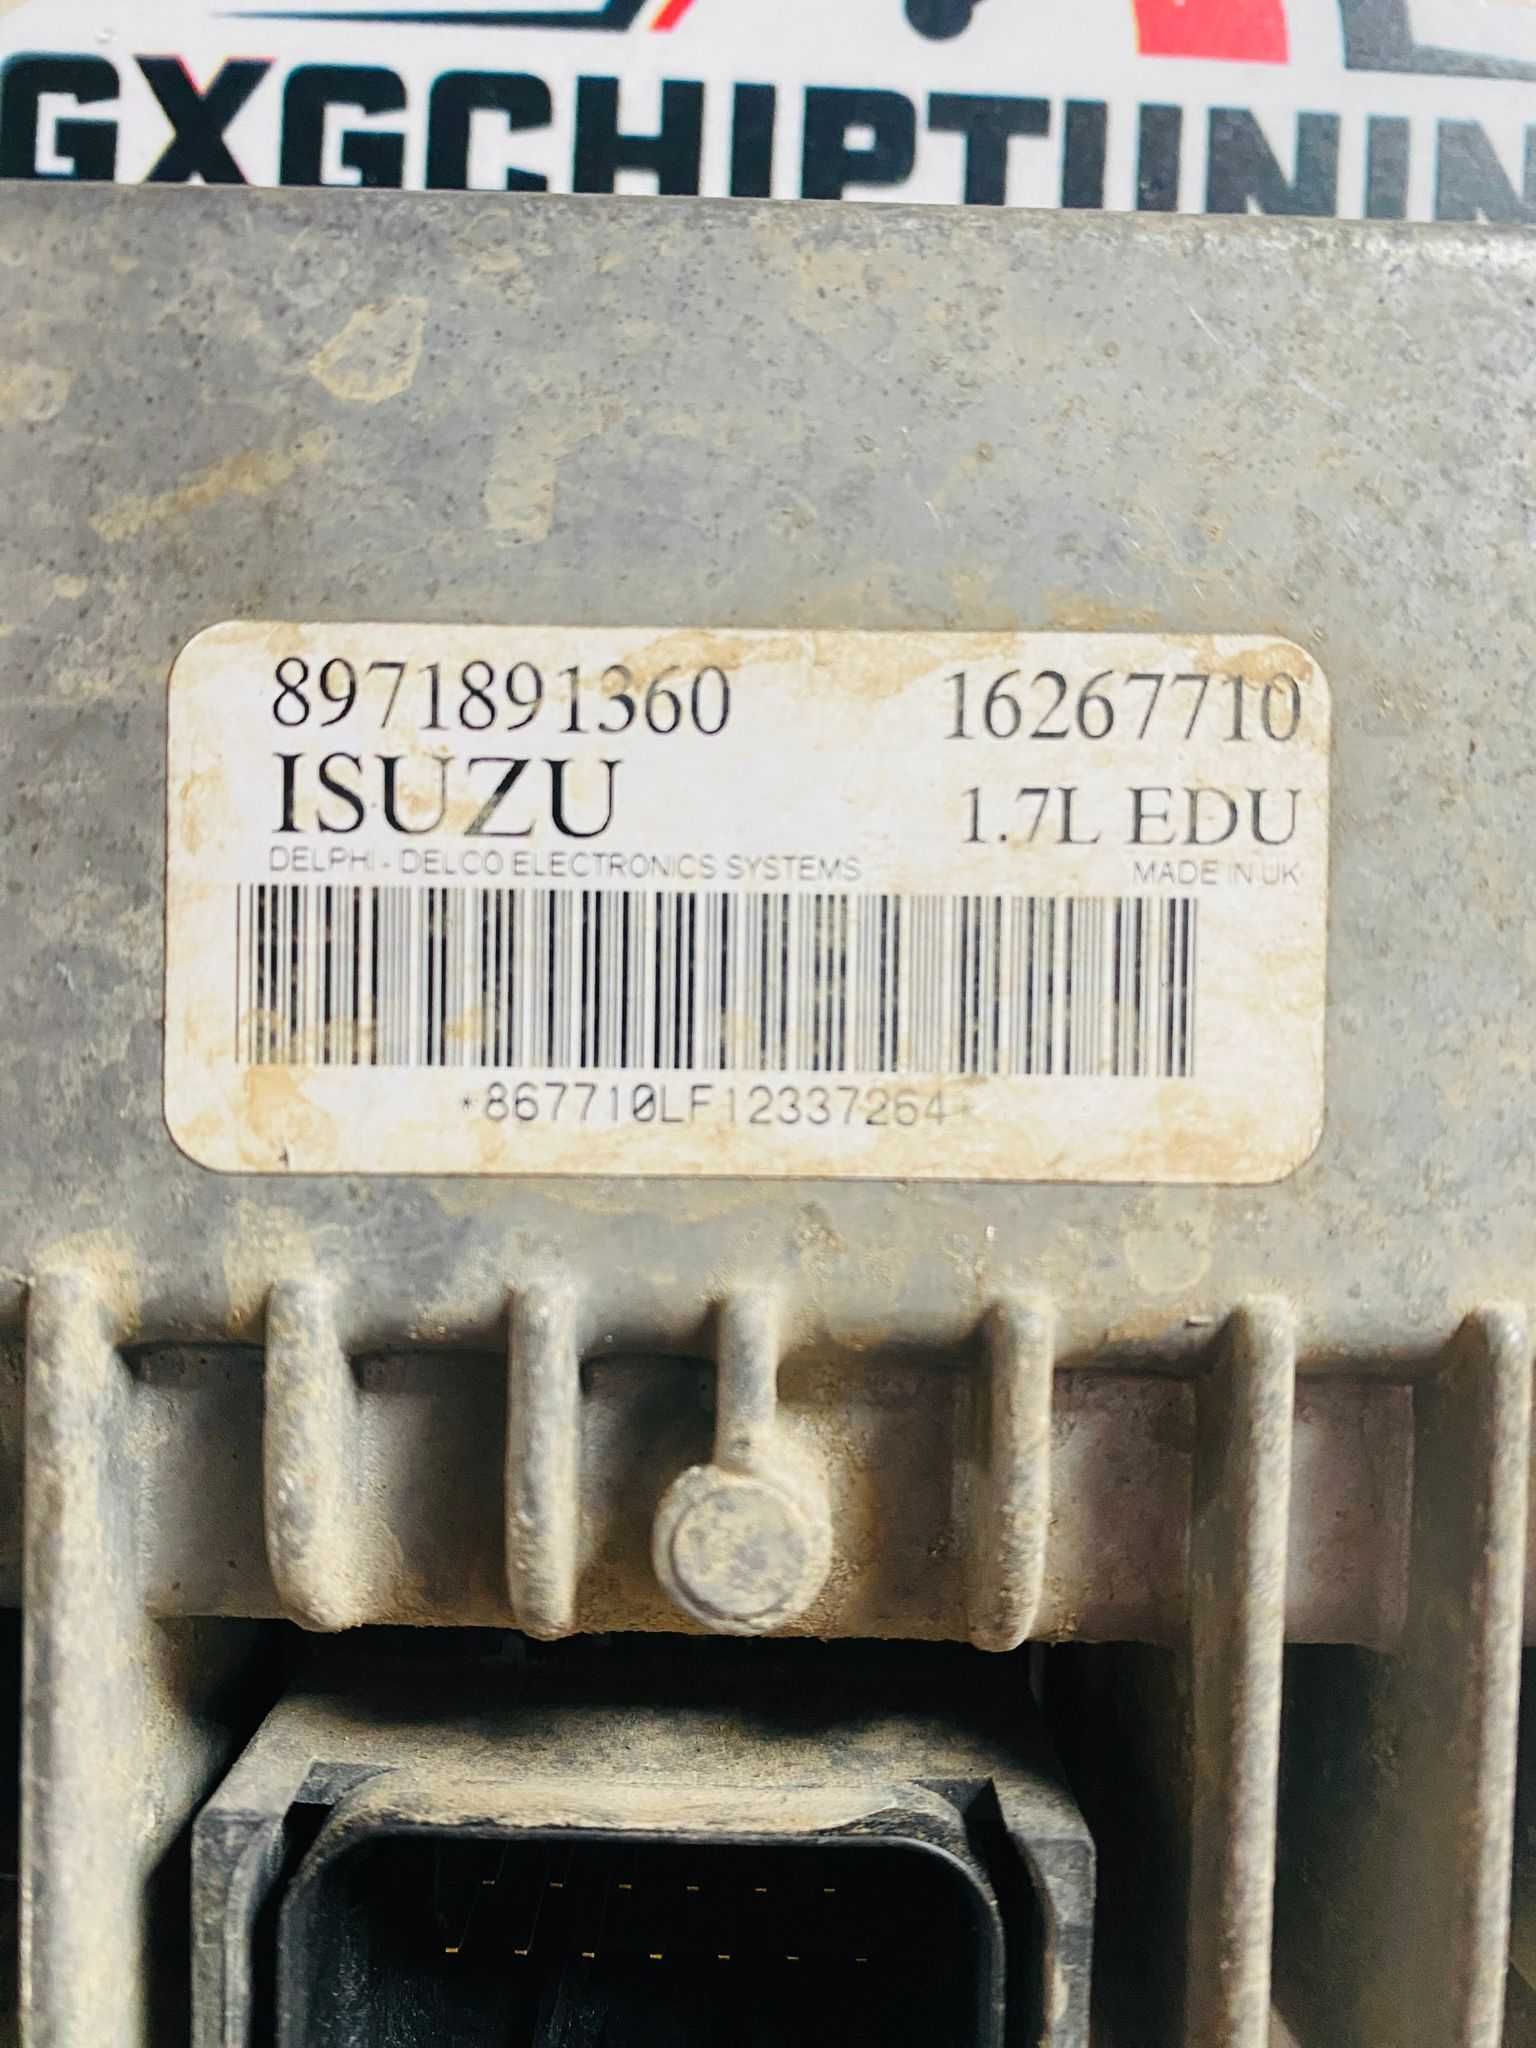 Calculator pompa injectie Opel Astra G 1.7 DTI 8971891360